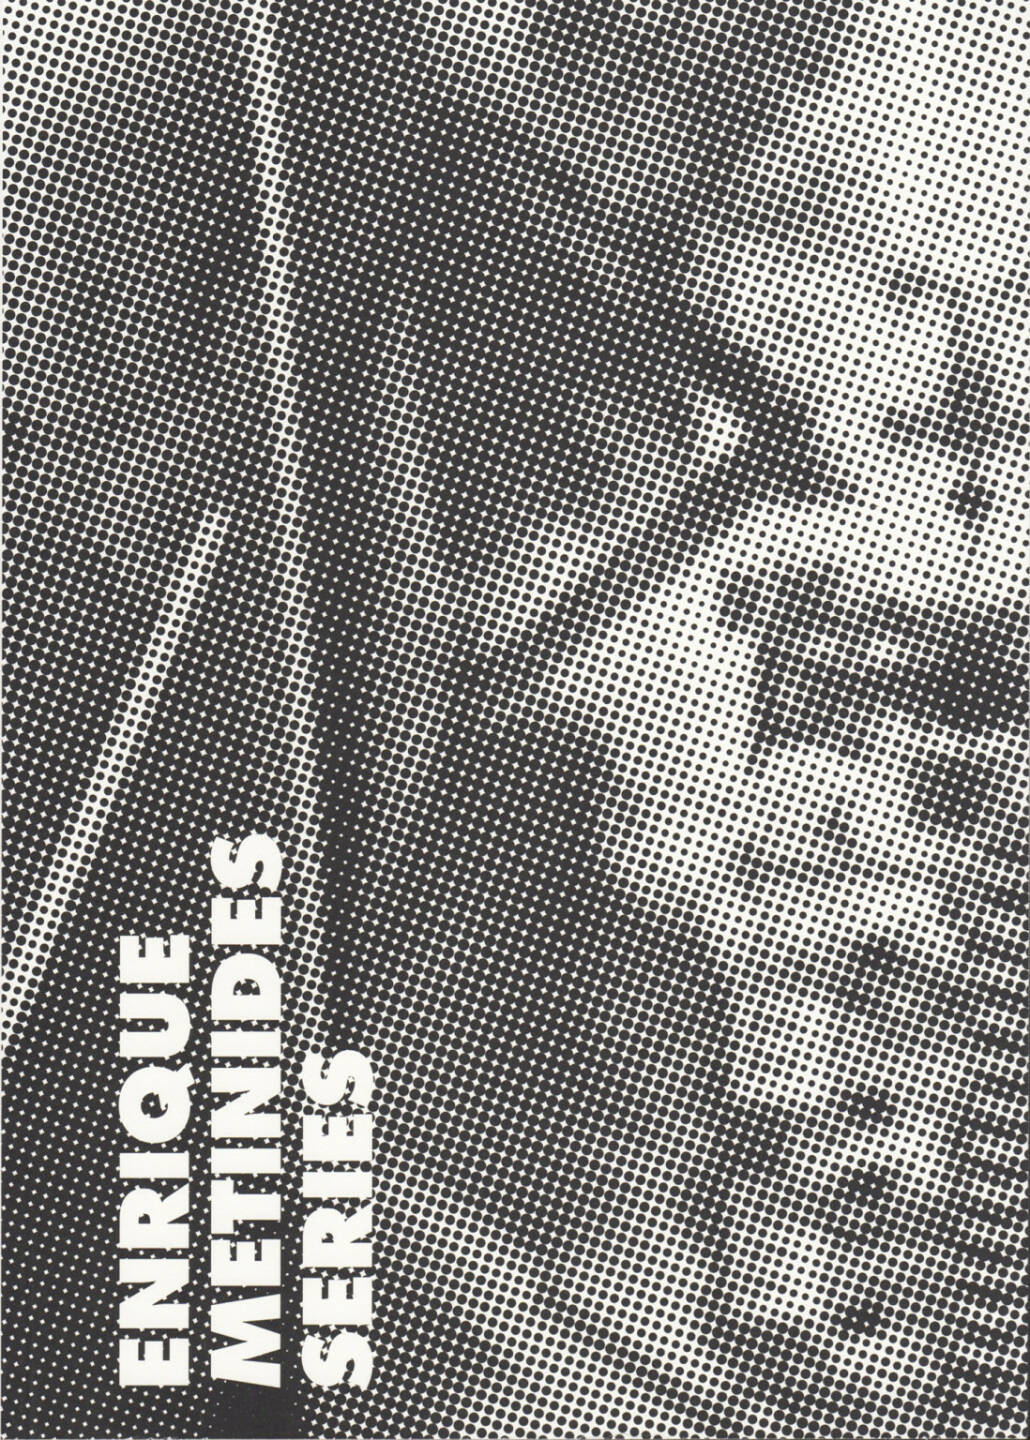 Enrique Metinides - Series, Kominek Gallery 2011, Cover - http://josefchladek.com/book/enrique_metinides_-_series 